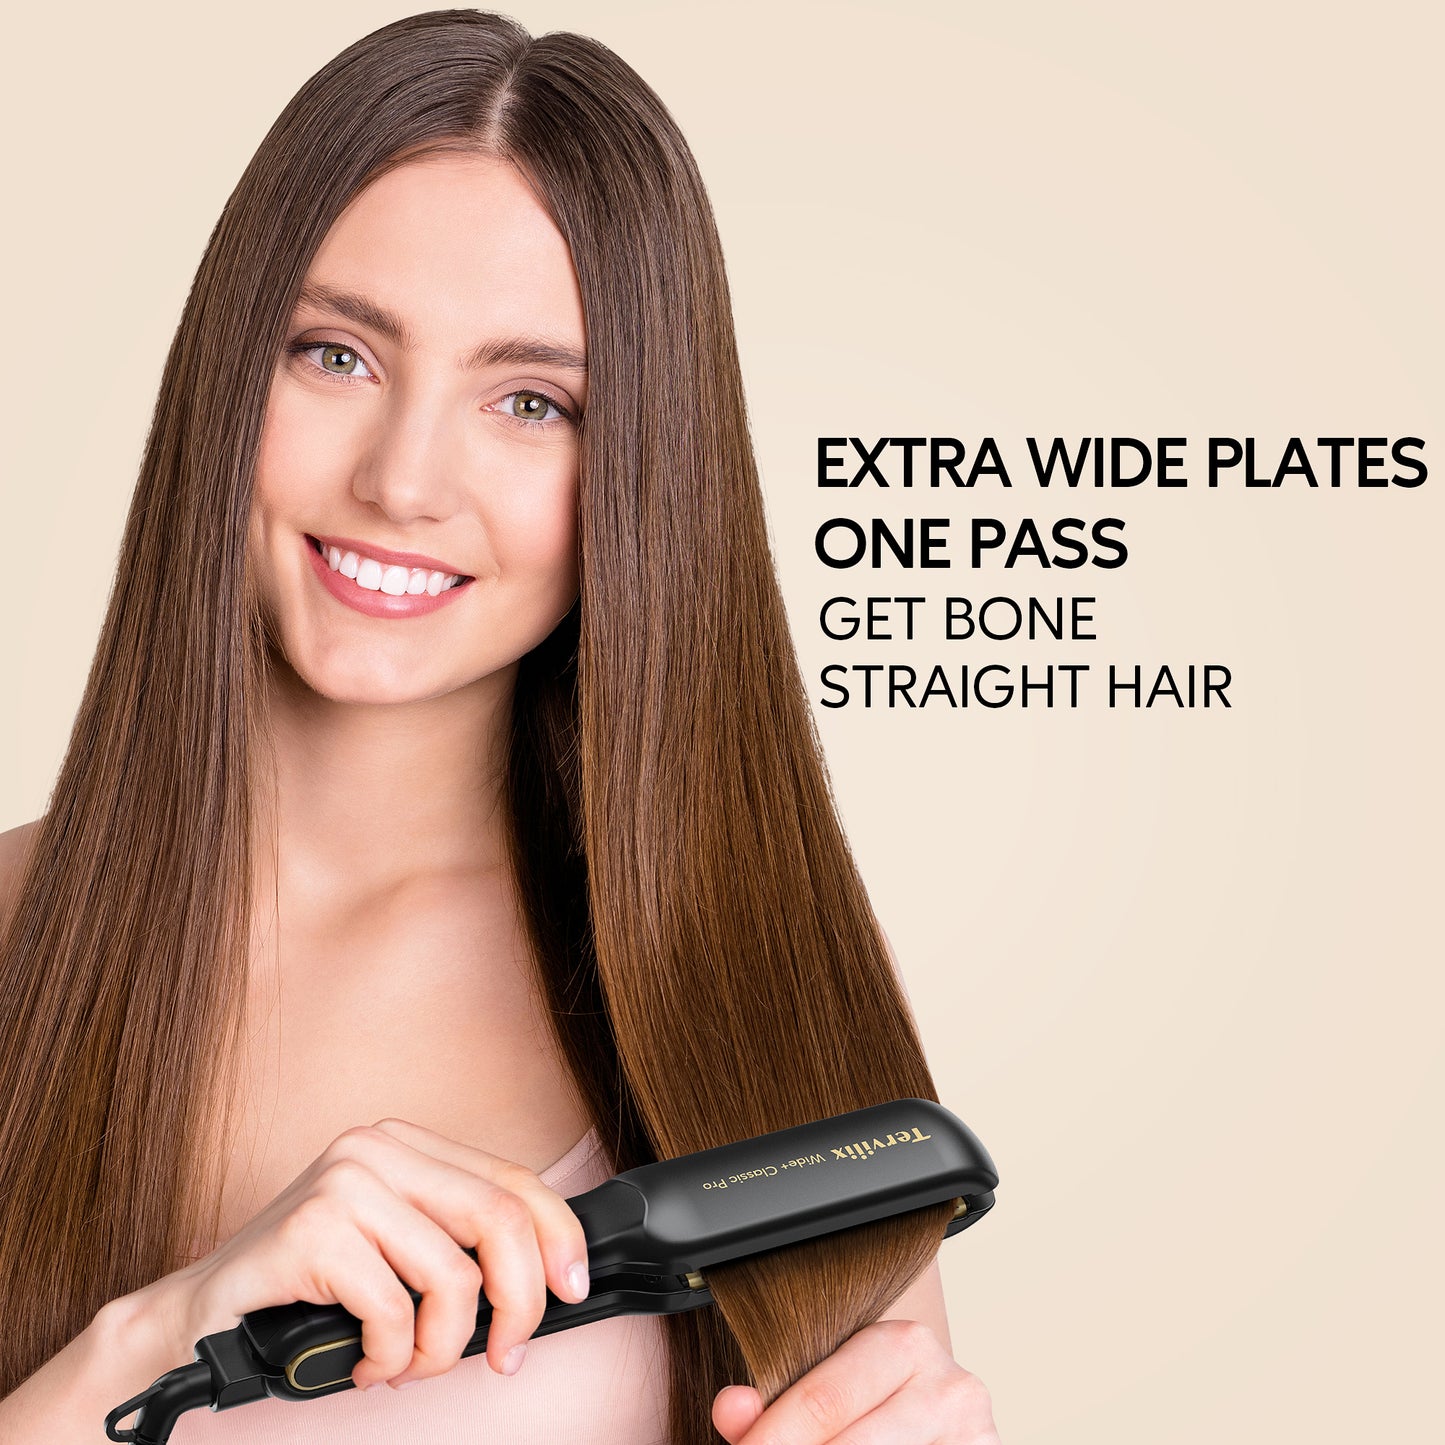 Terviiix 1.5'' Classic Pro Hair Straightener, Black